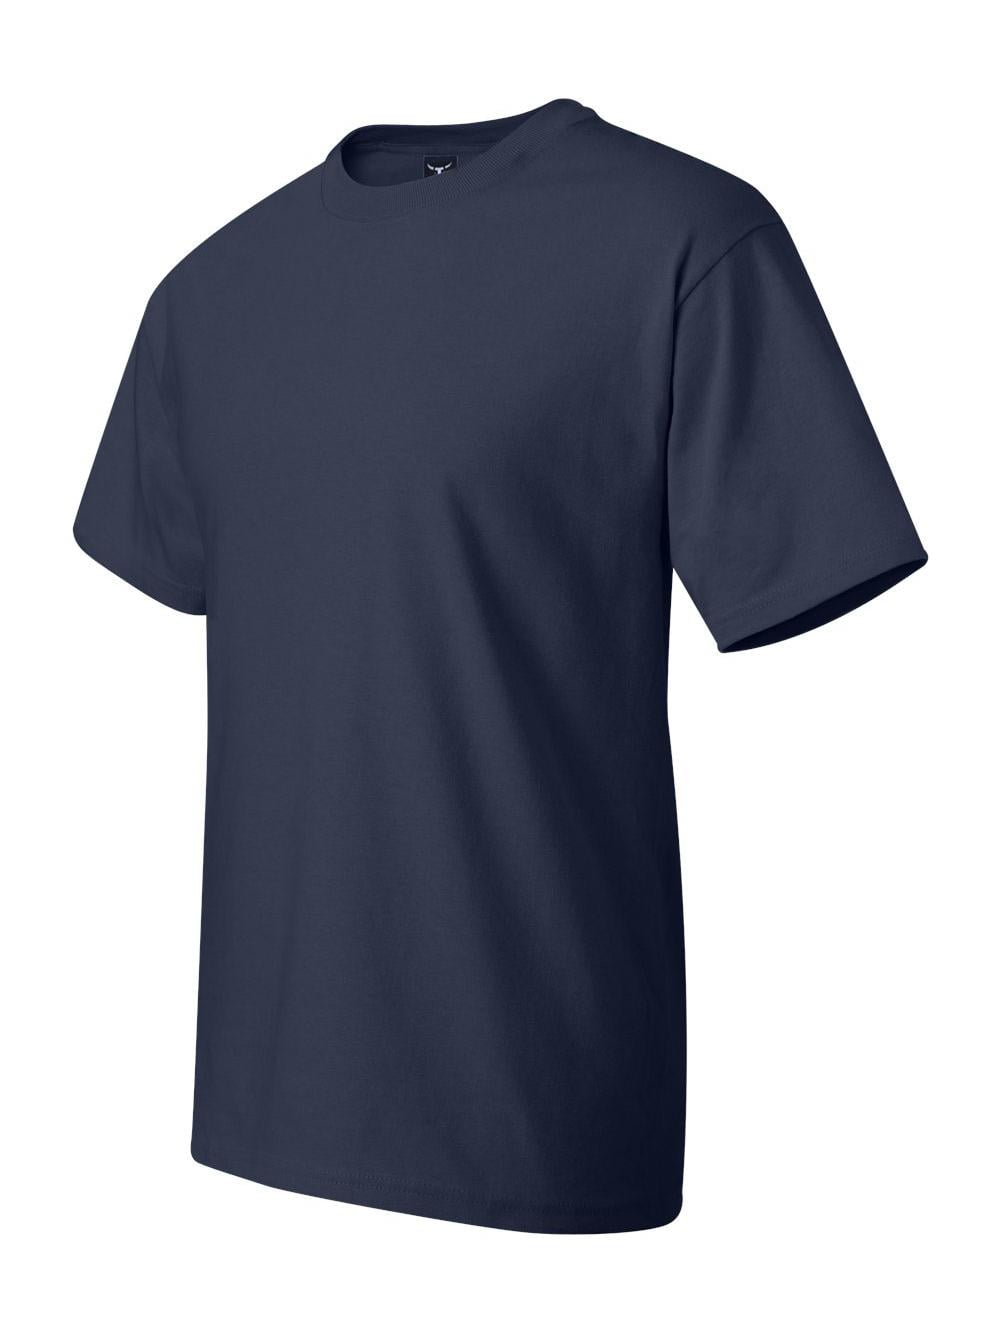 Hanes - Beefy-T Tall T-Shirt - 518T - Navy - Size: 4XLT - Walmart.com